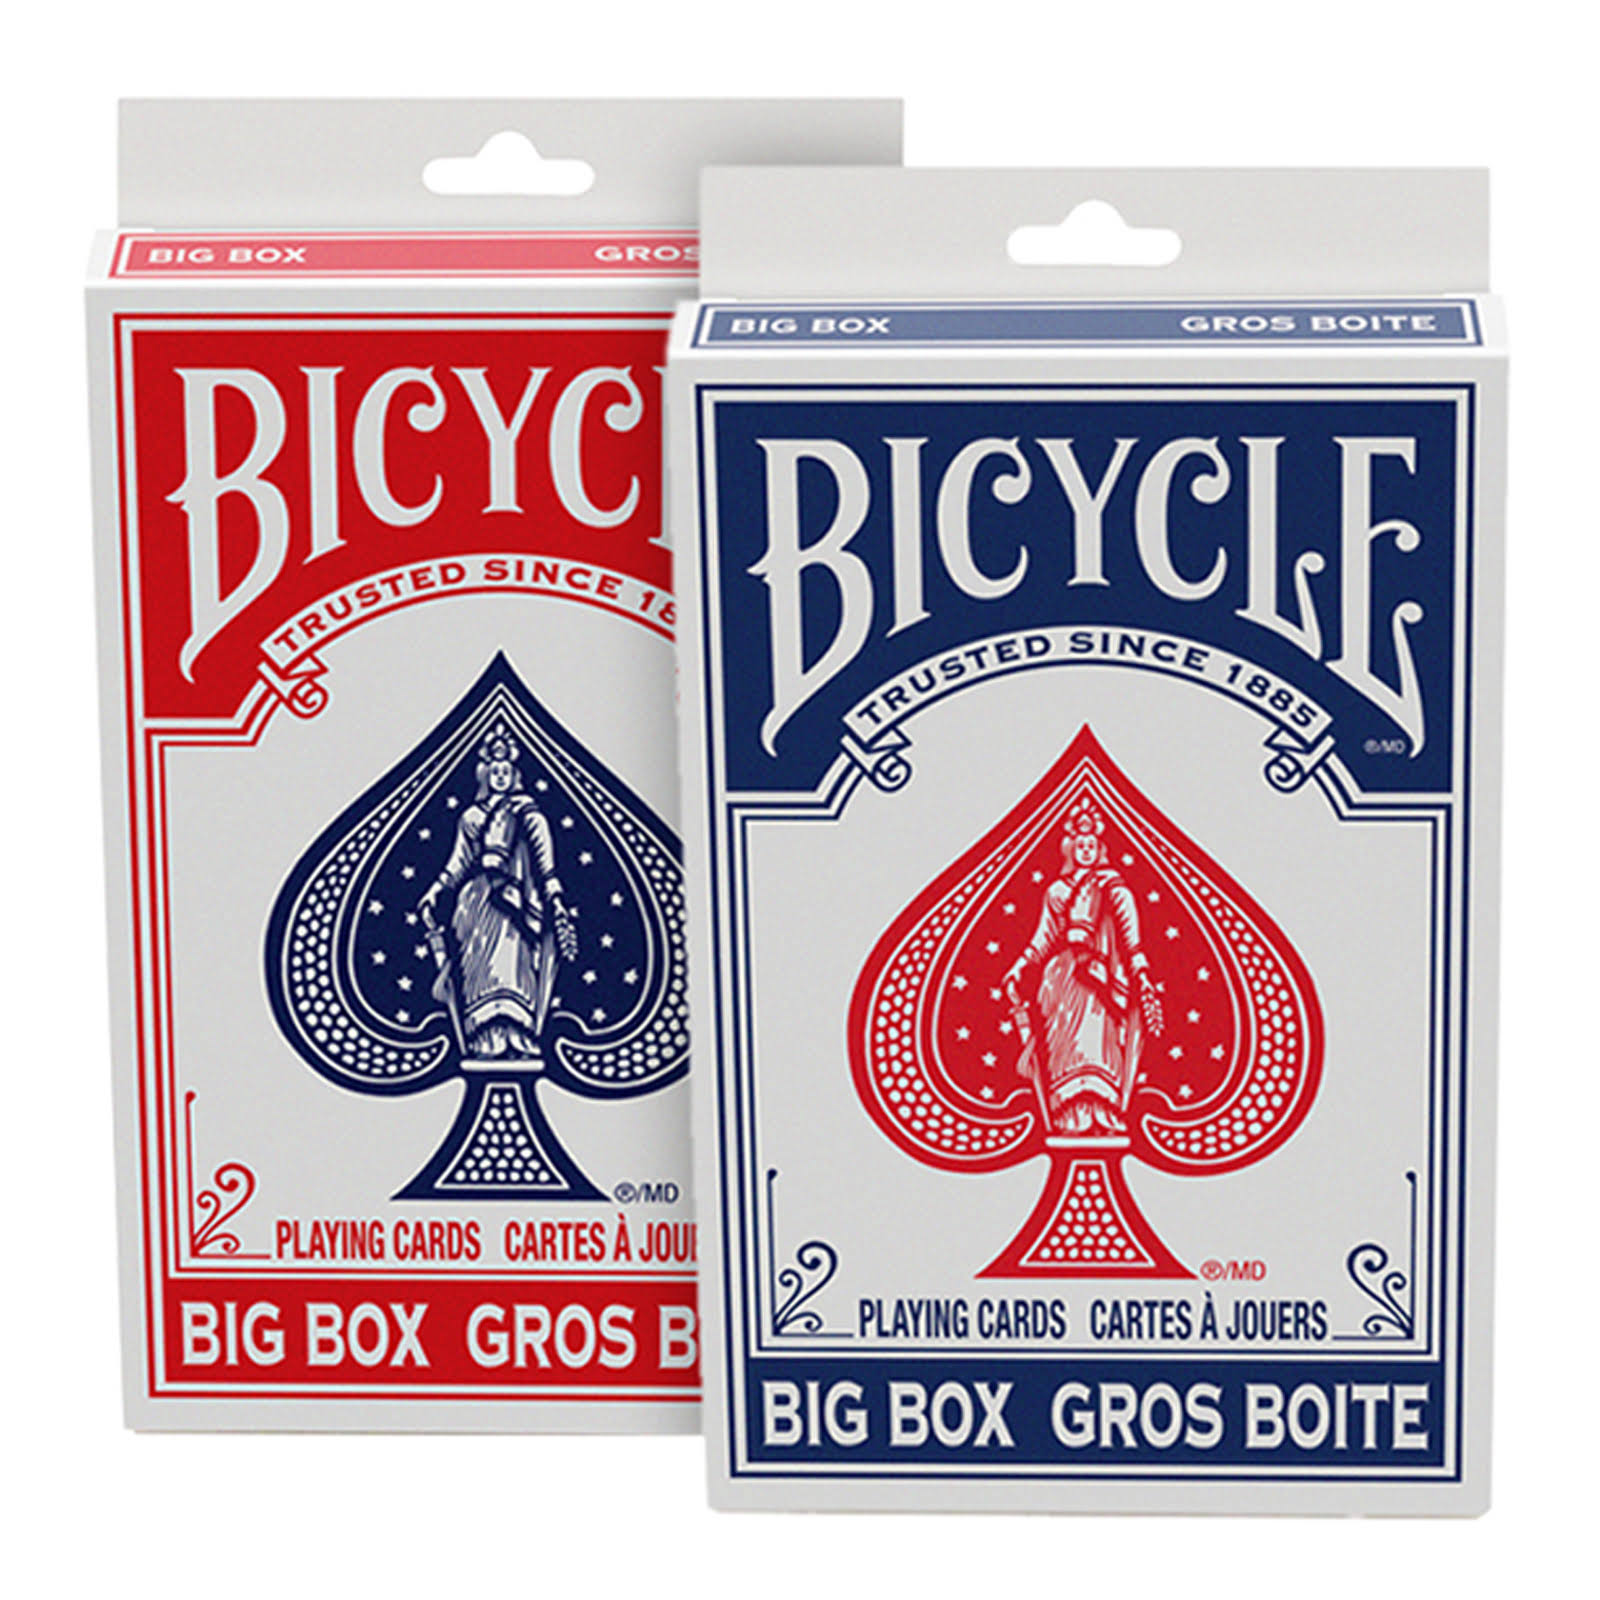 Bicycle Big Box Playing Cards - 18cm x 11cm